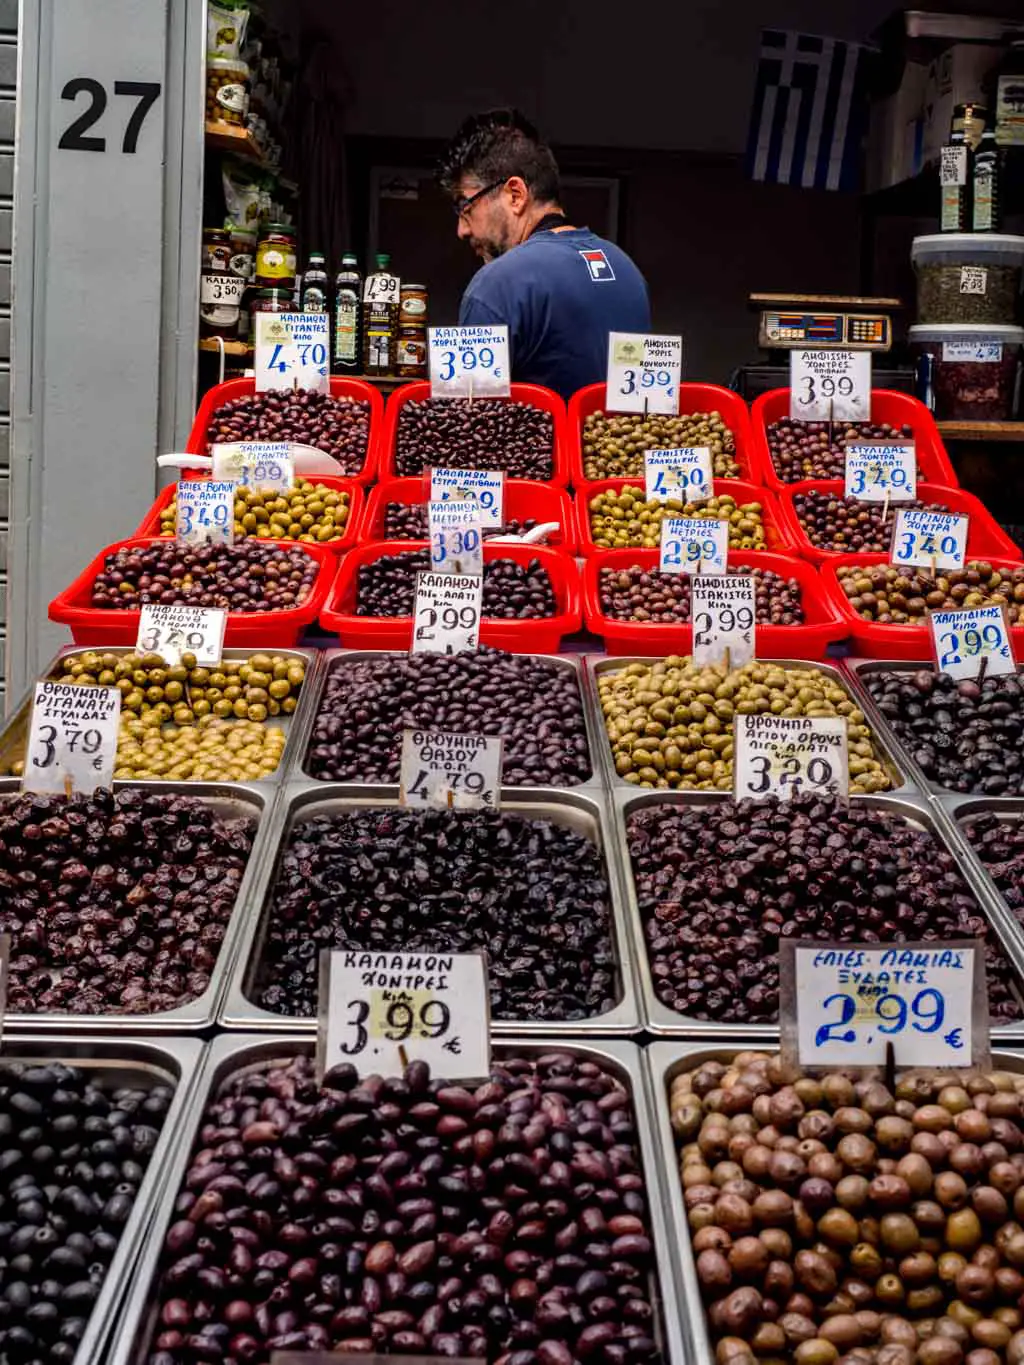 olives athens food adventure tour athens greece - laugh travel eat